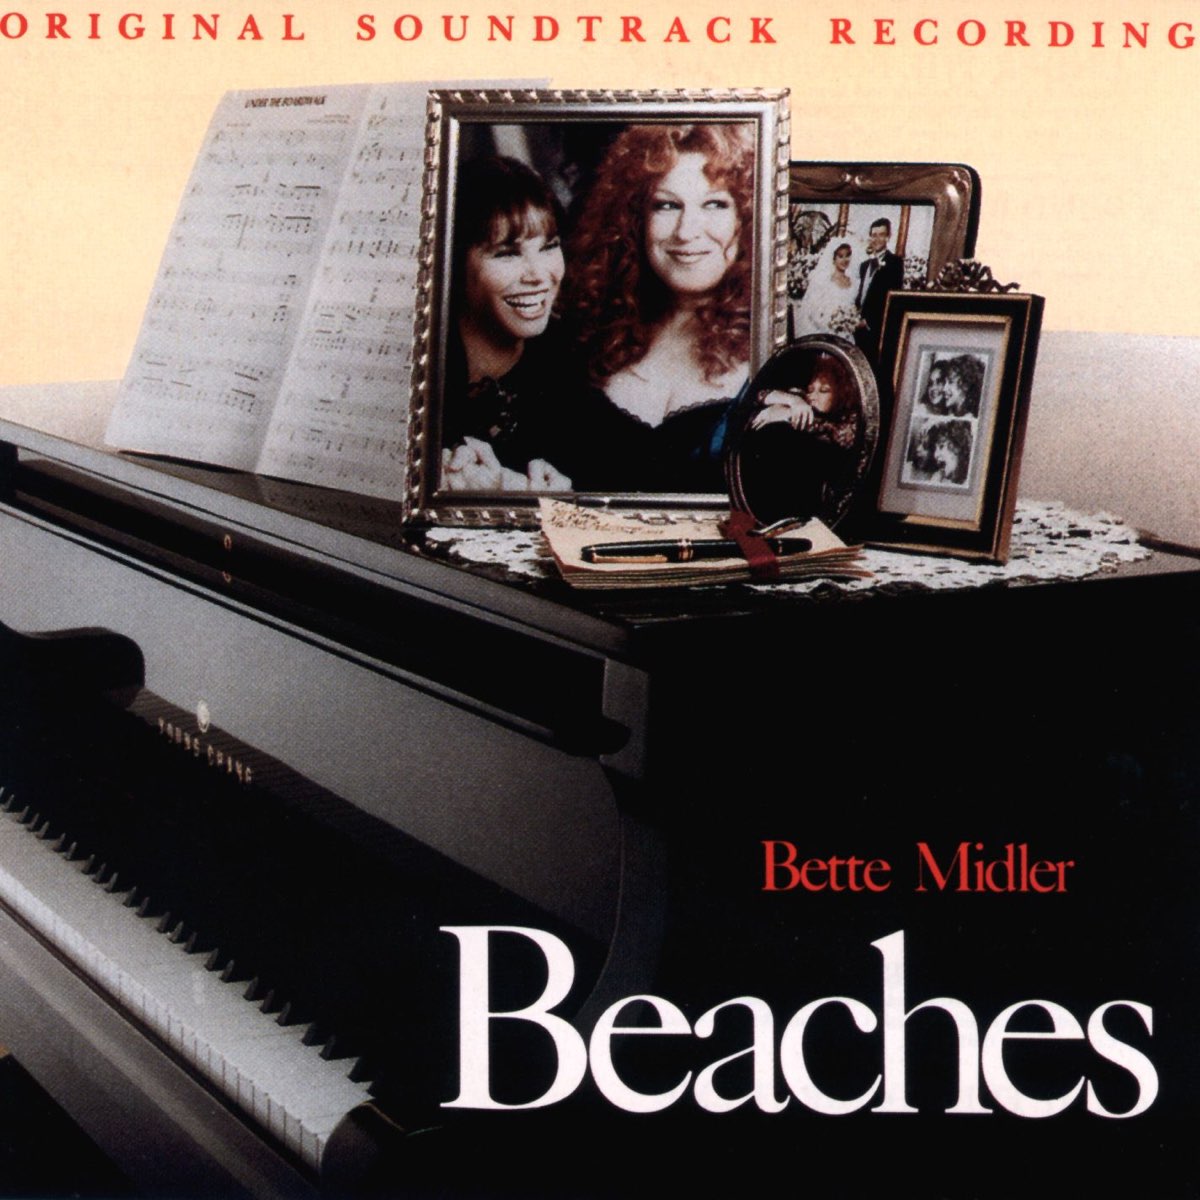 ‎Beaches (Original Motion Picture Soundtrack) Album by Bette Midler